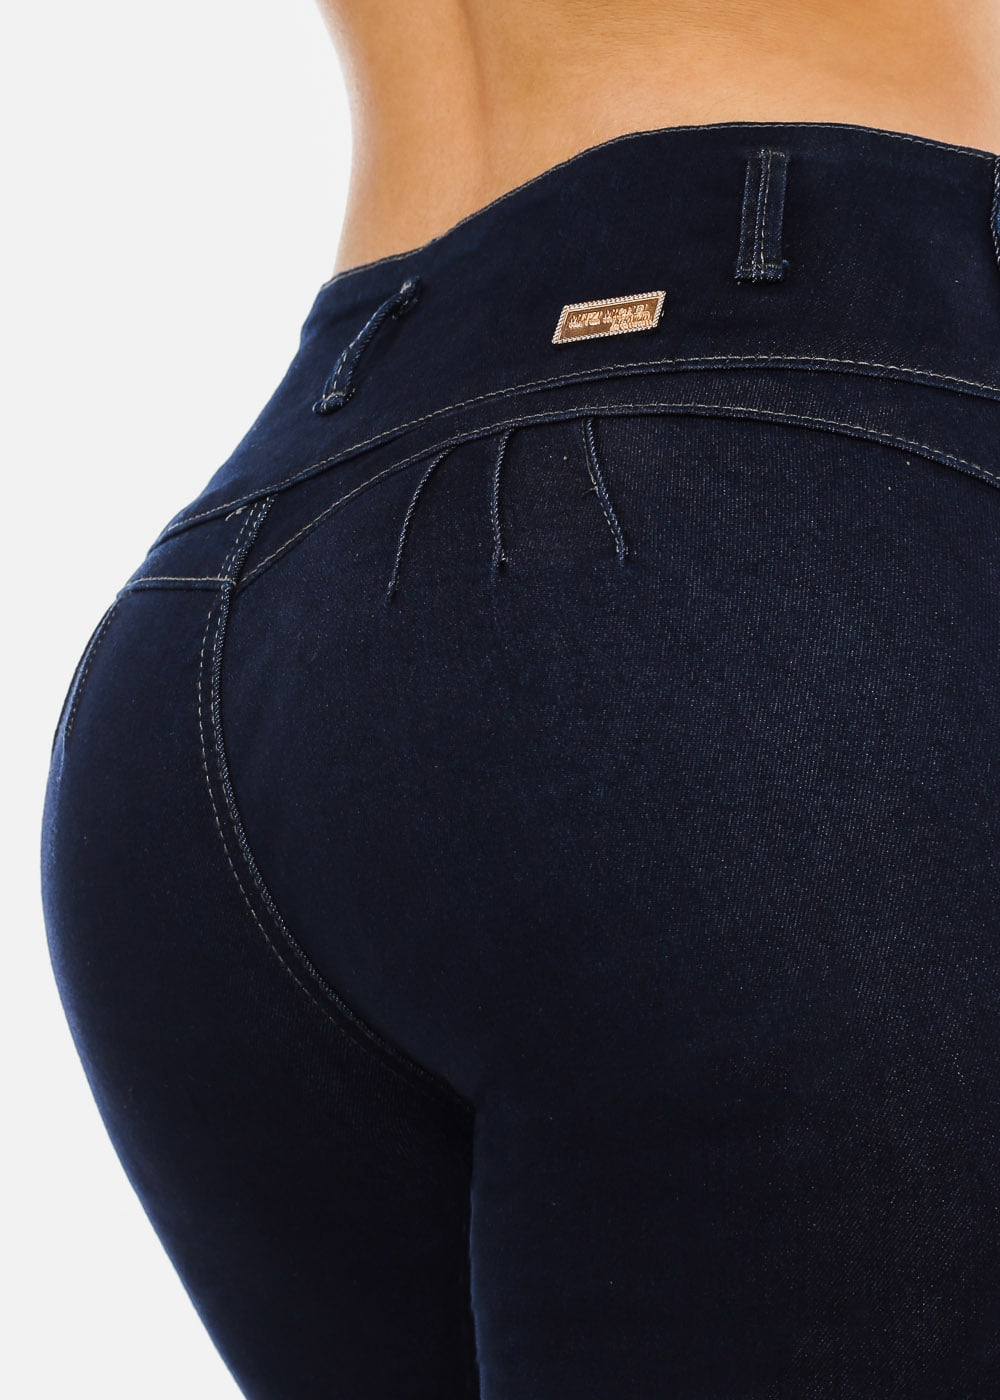 Moda Xpress Womens Skinny Jeans Butt Lifting Mid Rise Dark Wash Jeans 10875g